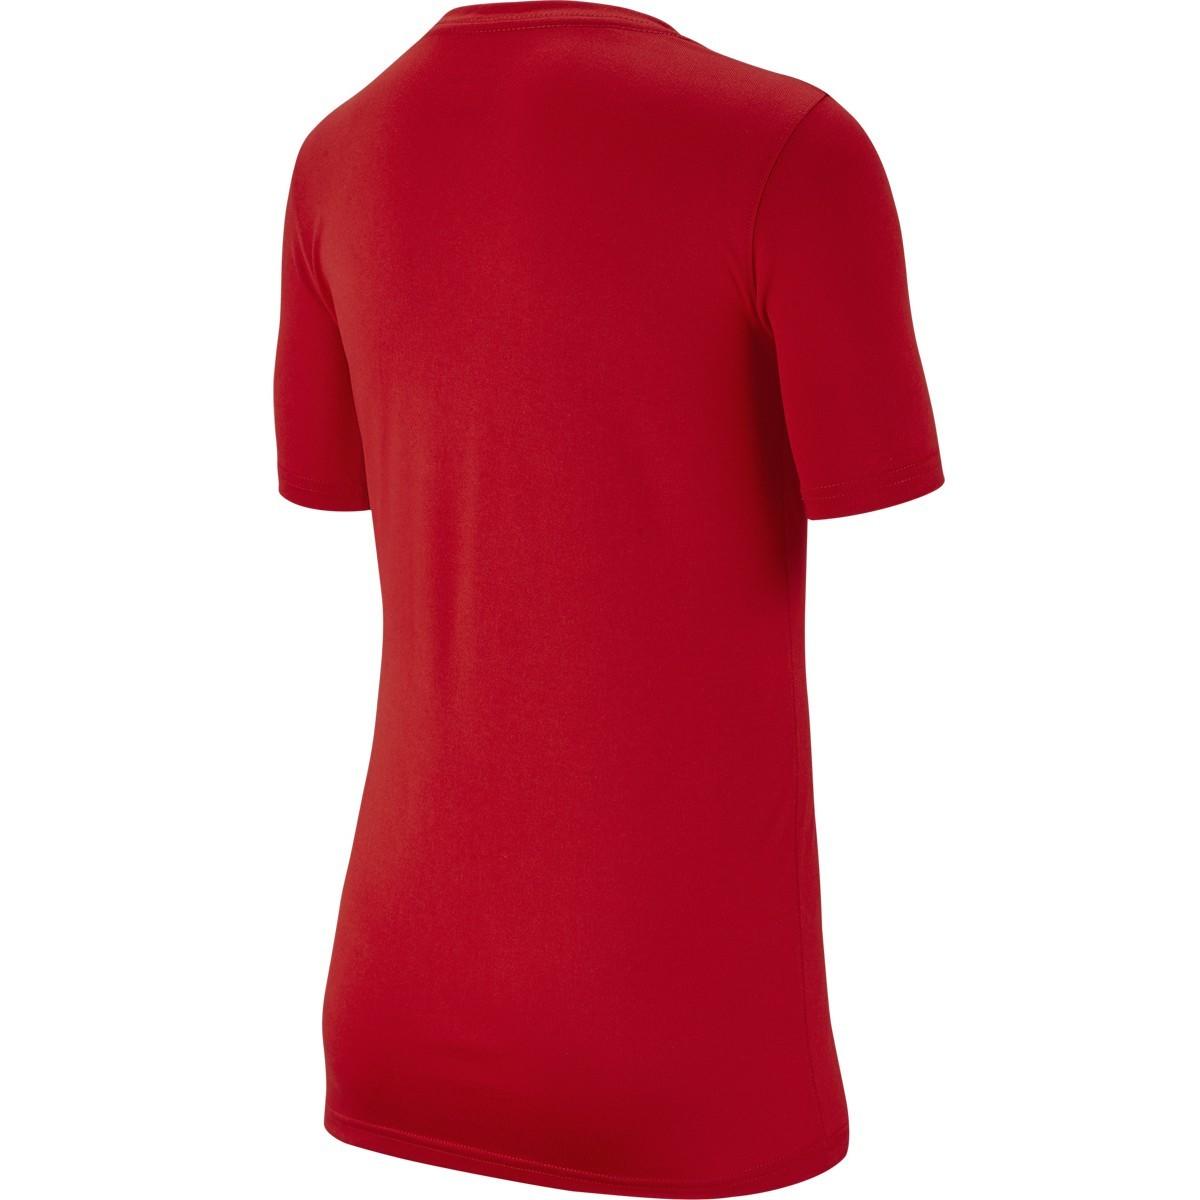 Теннисная футболка детская Nike Boy's Spring Dry Legend Swoosh Crew red